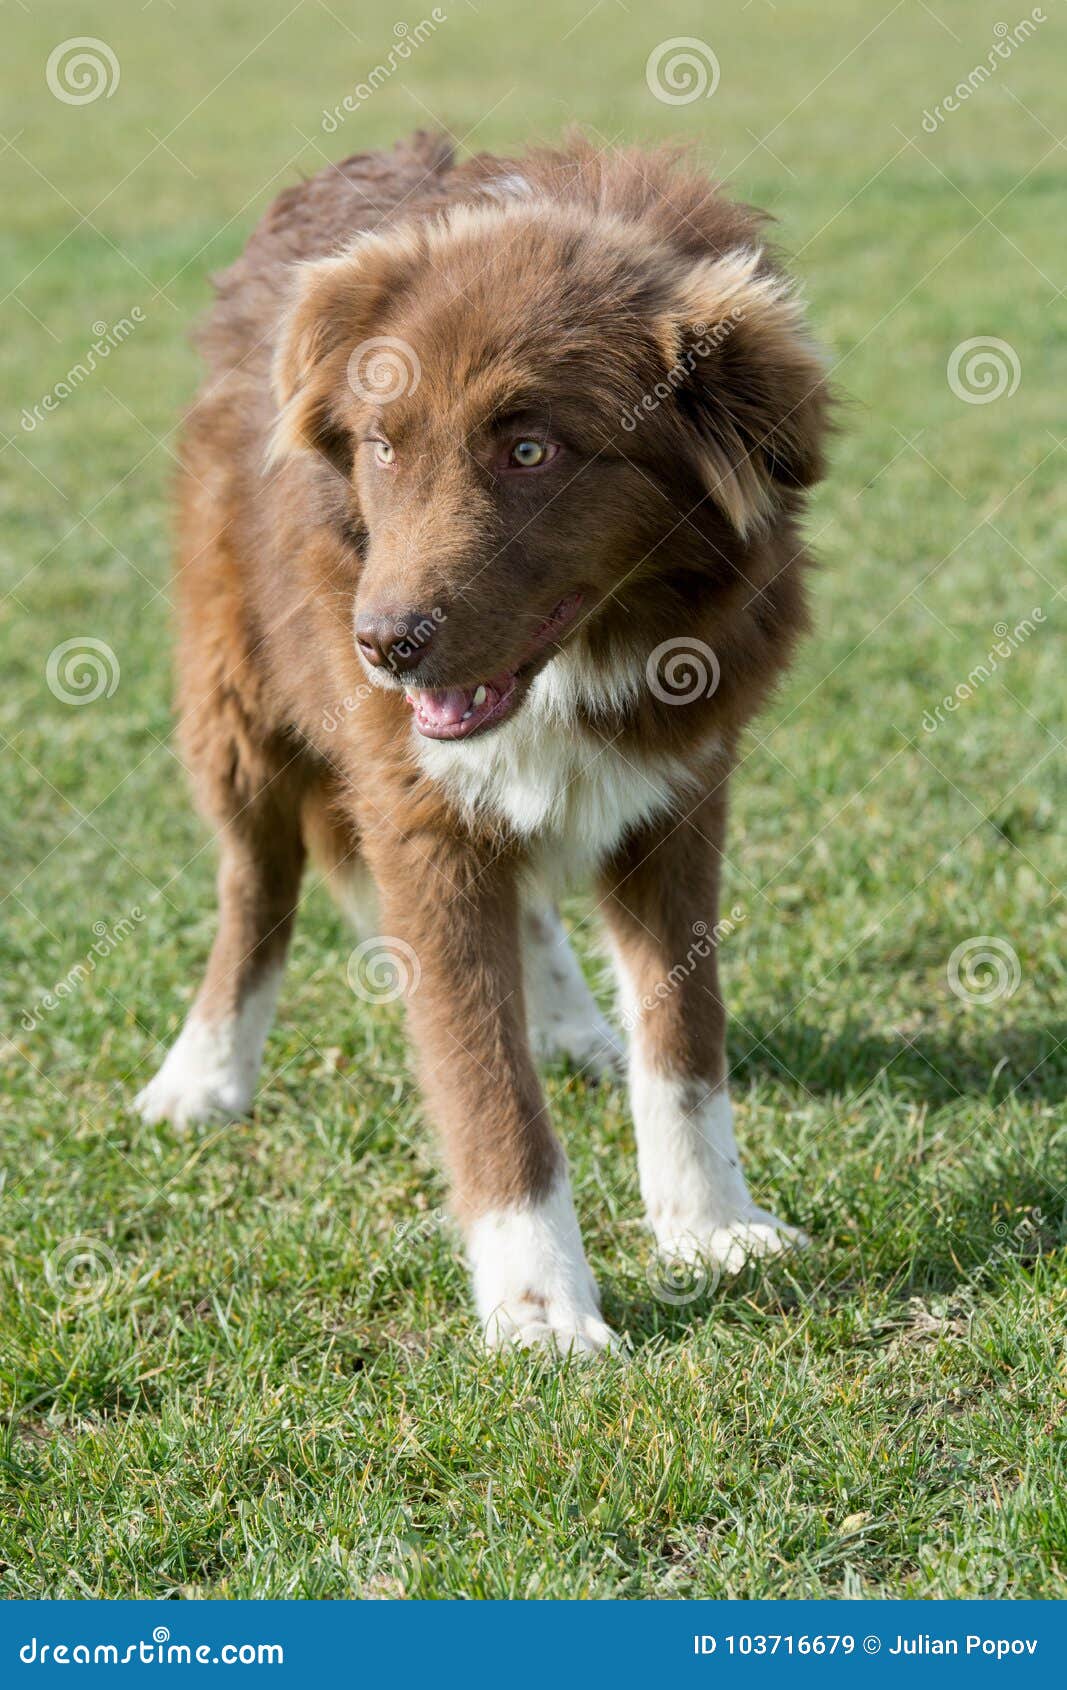 Karakachan Dog Portrait The Bulgarian Shepherd Dog In The Park Stock Image Image Of Resting Mammal 103716679